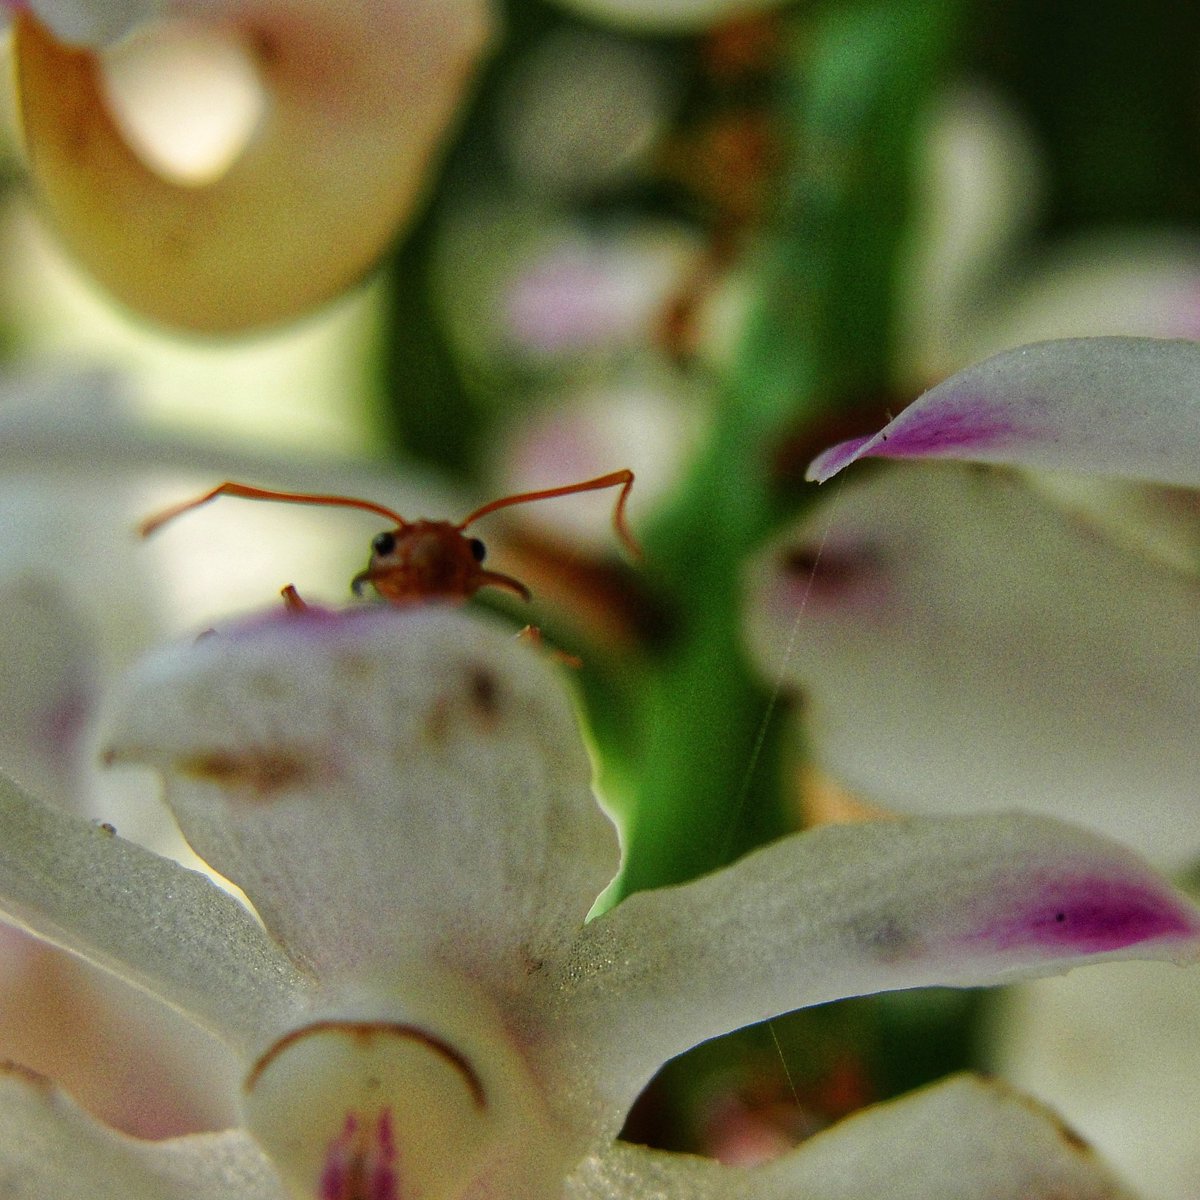 Peek A Boo .
.
.
[ #StayHomeStaySafe #IndiaFightsCorona ] #ants #nature #Kopou #foxtailorchid #orchids #peekaboo #throwback #CreatAtHome